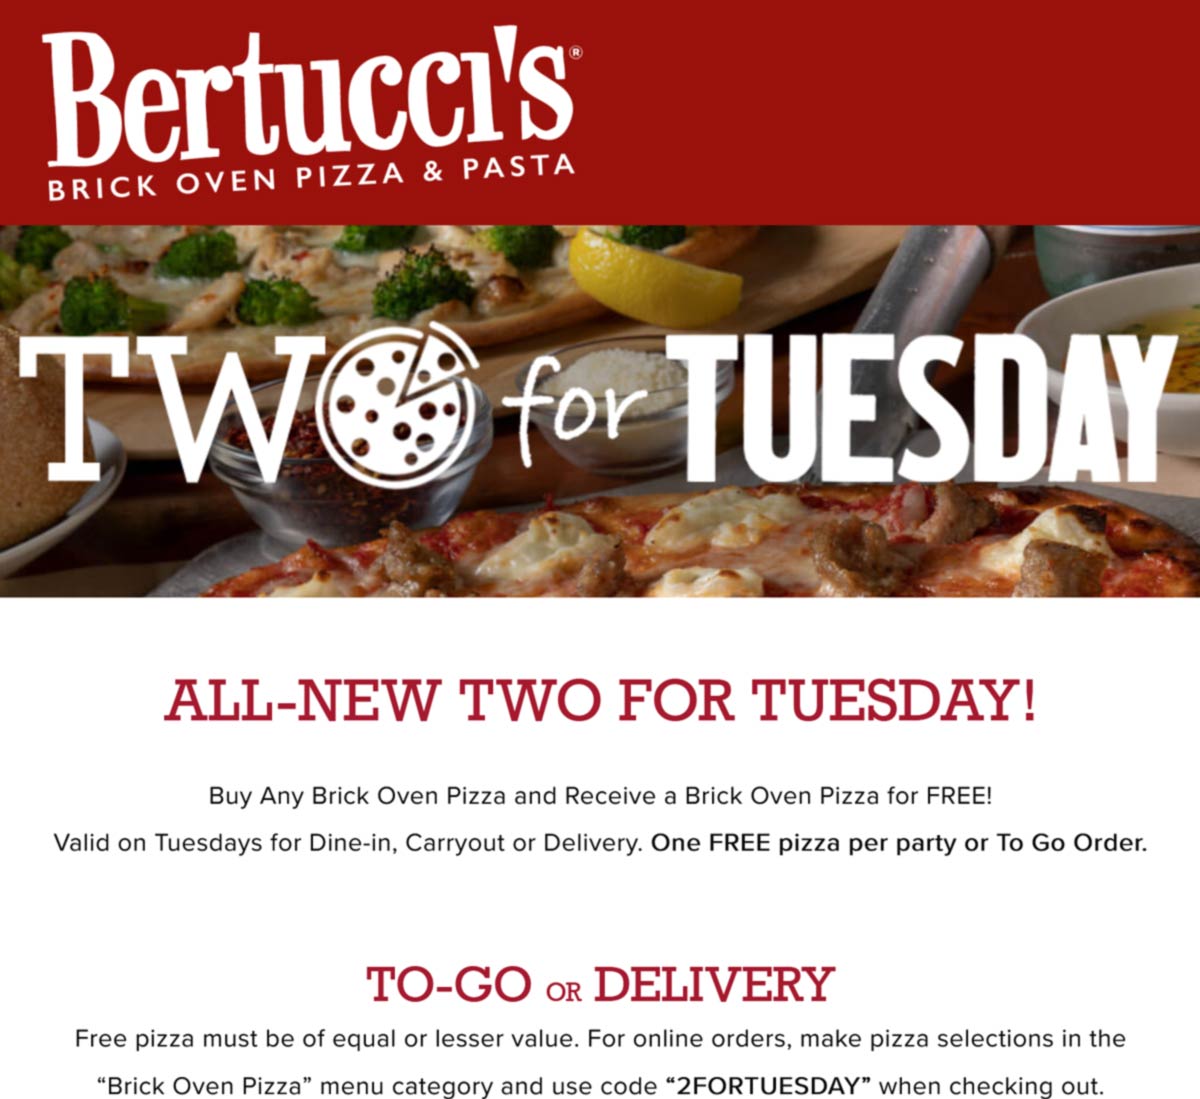 Bertuccis restaurants Coupon  Second brick oven pizza free today at Bertuccis restaurants #bertuccis 